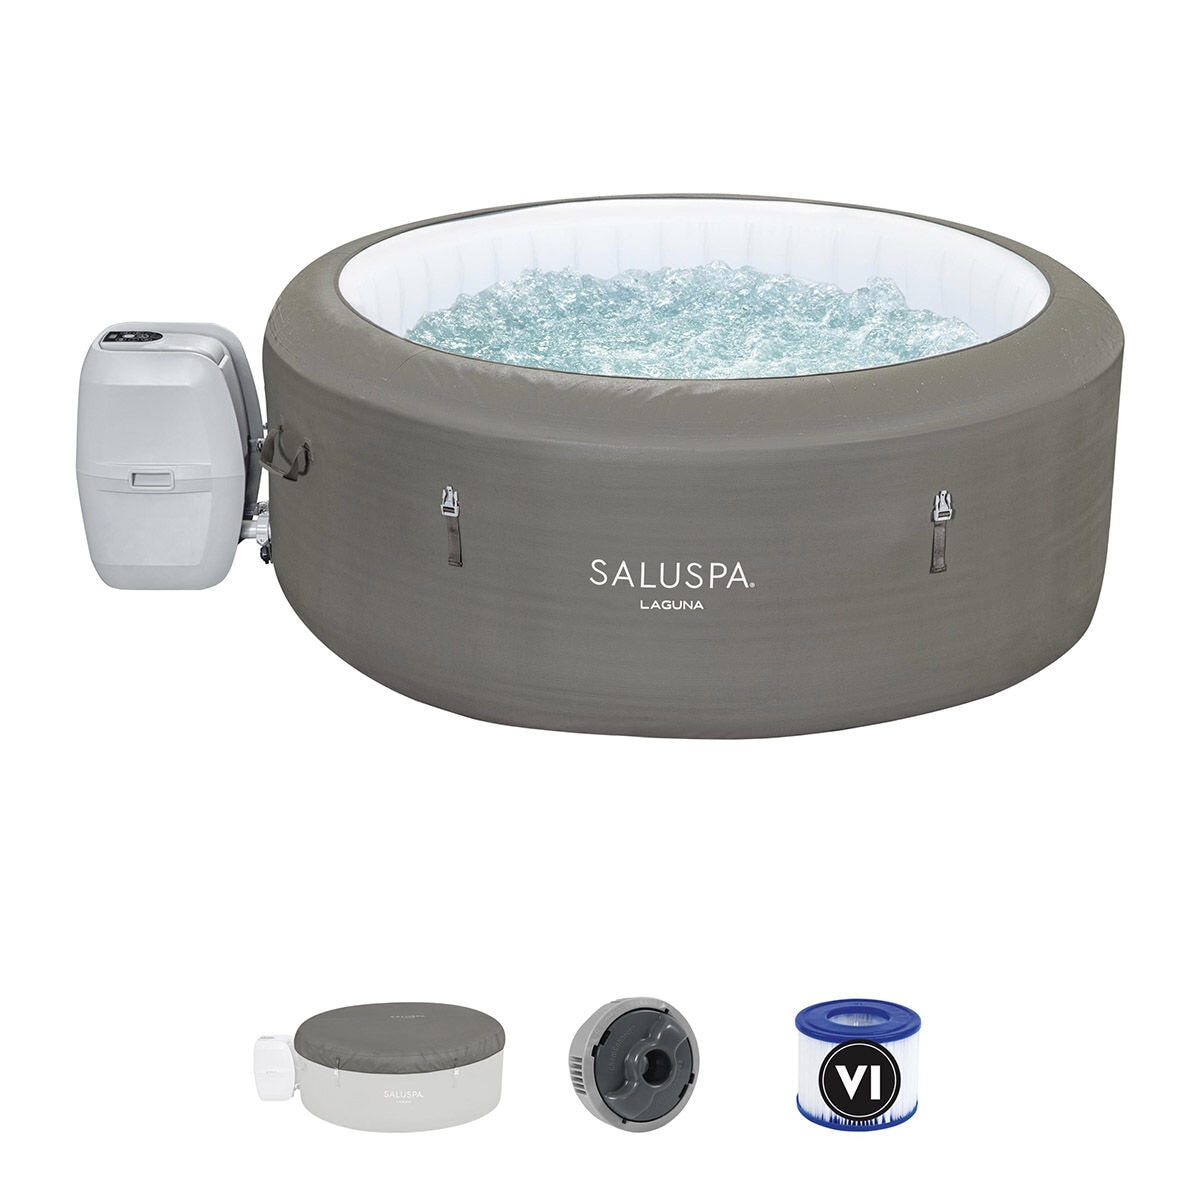 SaluSpa 充氣式加熱按摩池